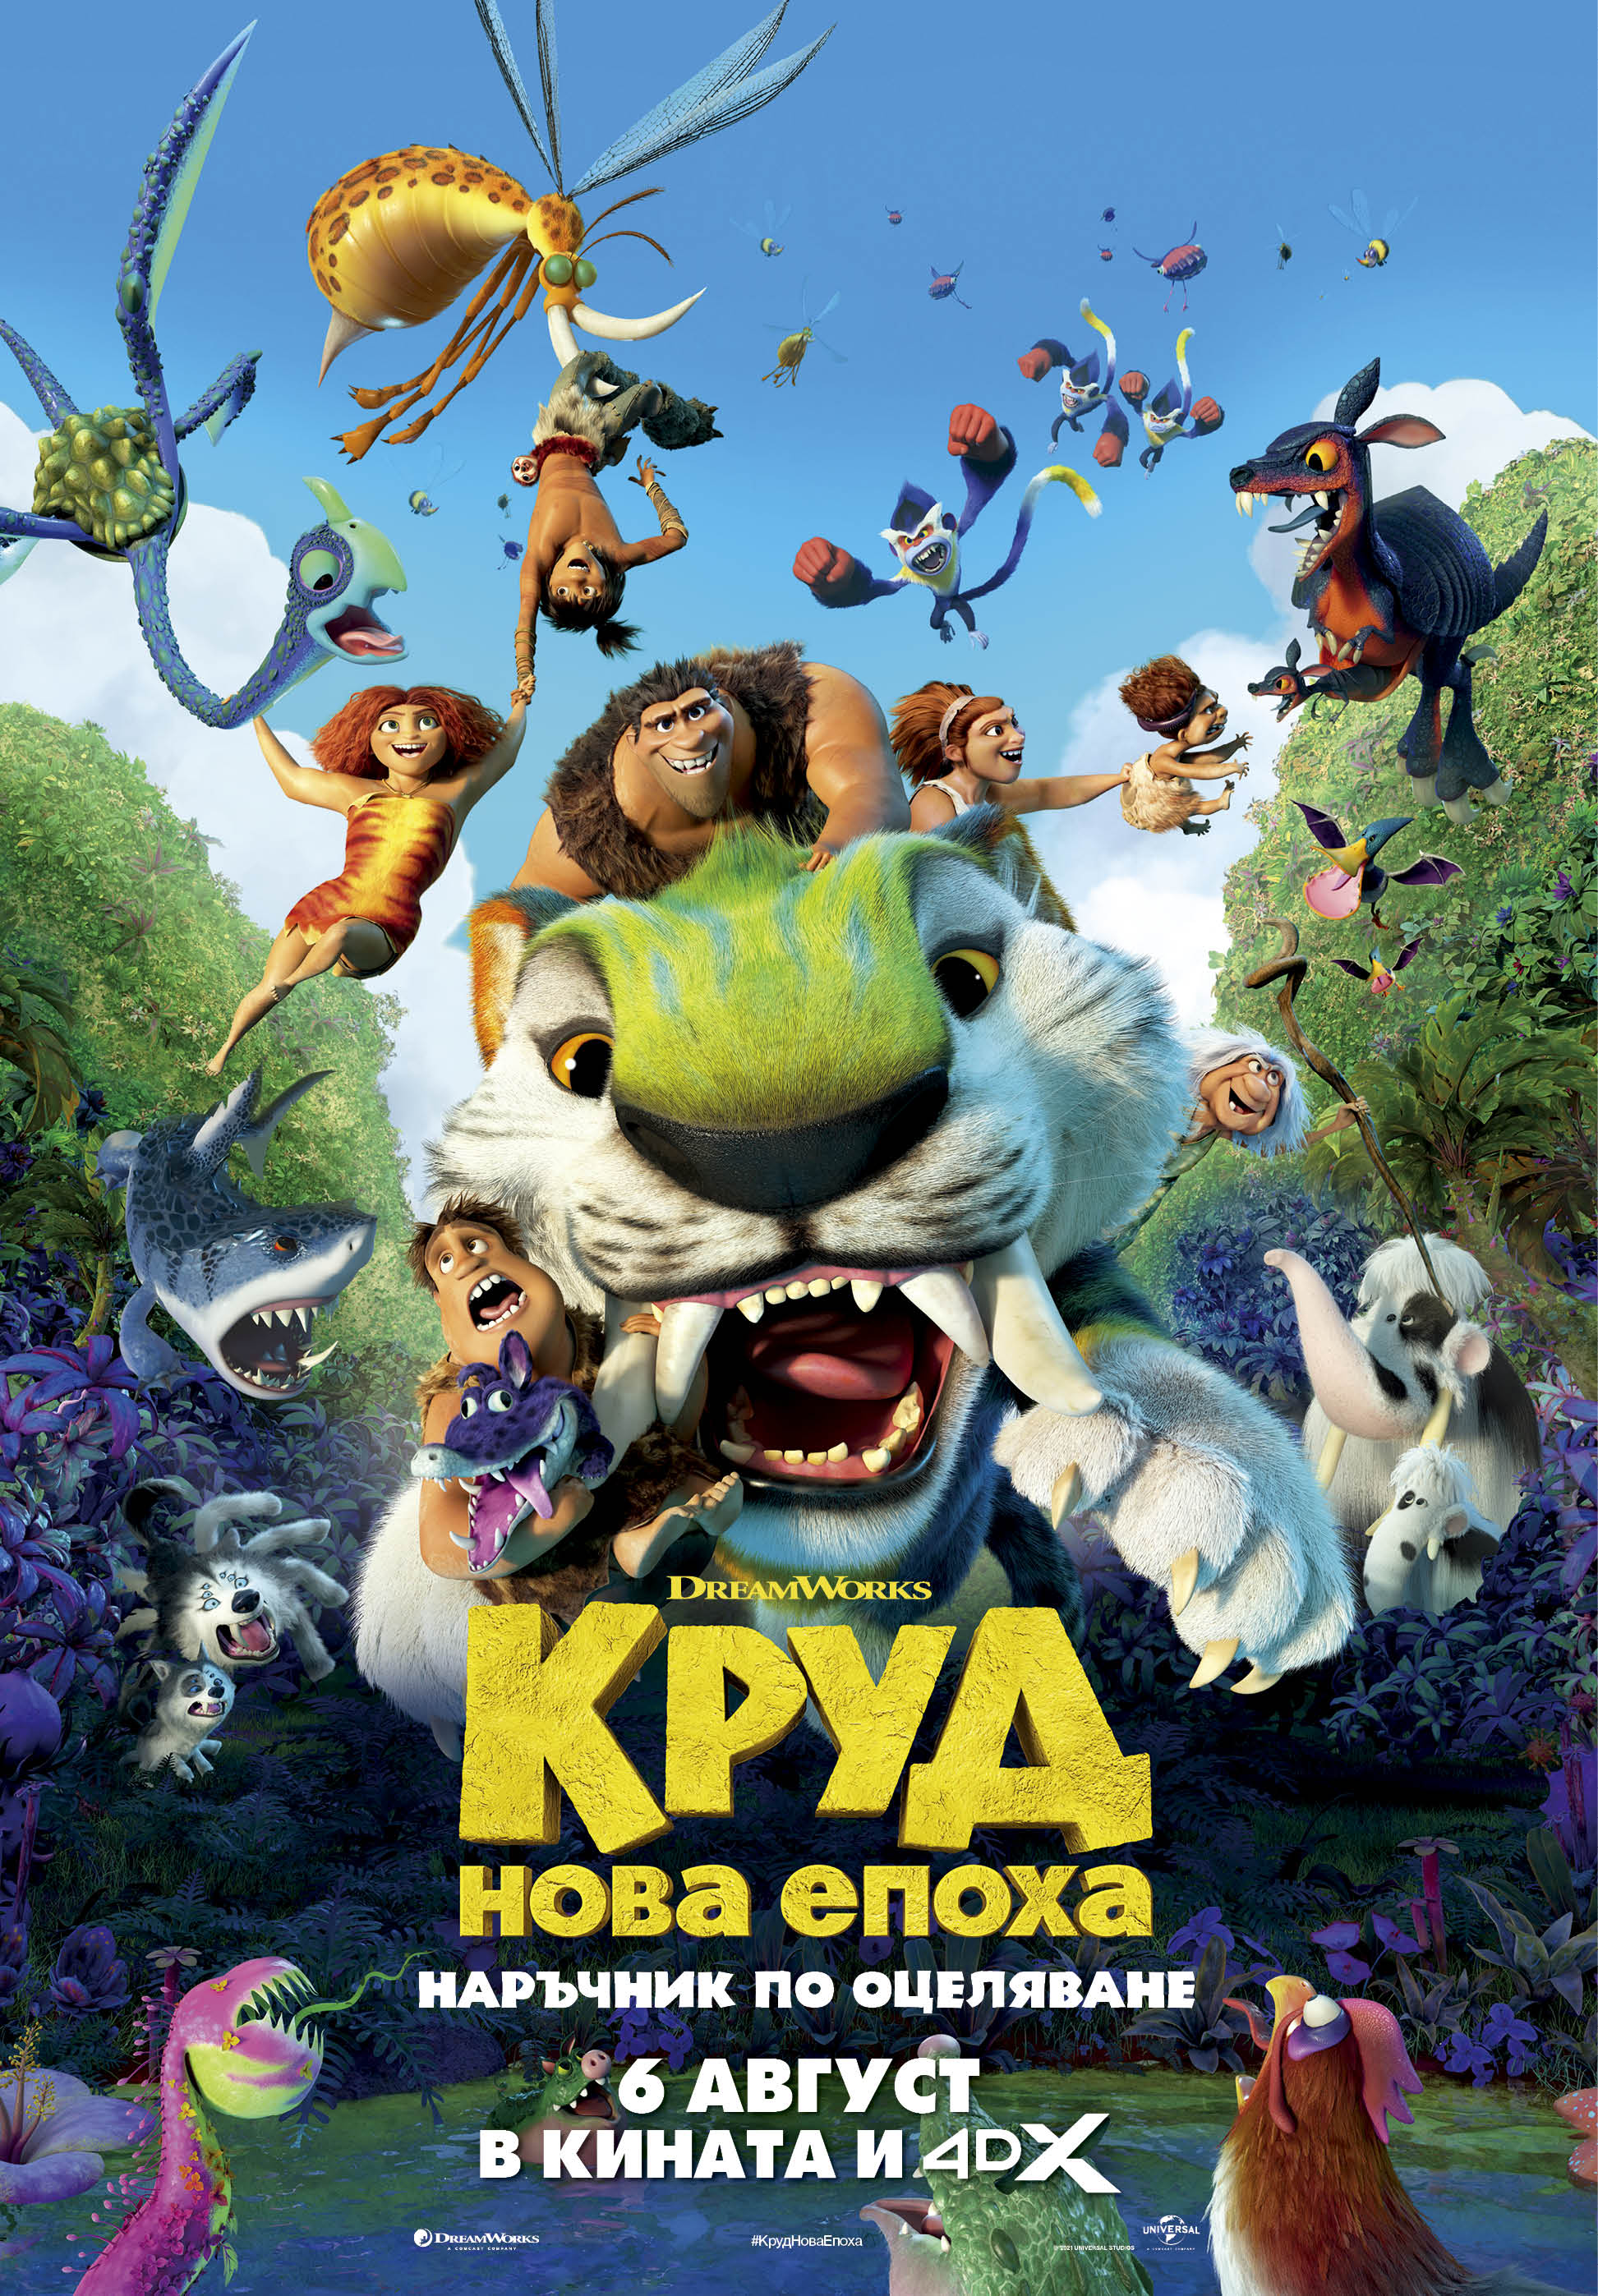 CINEMAX Благоевград: Кино програма - Круд: Нова епоха - 06-12 август 2021